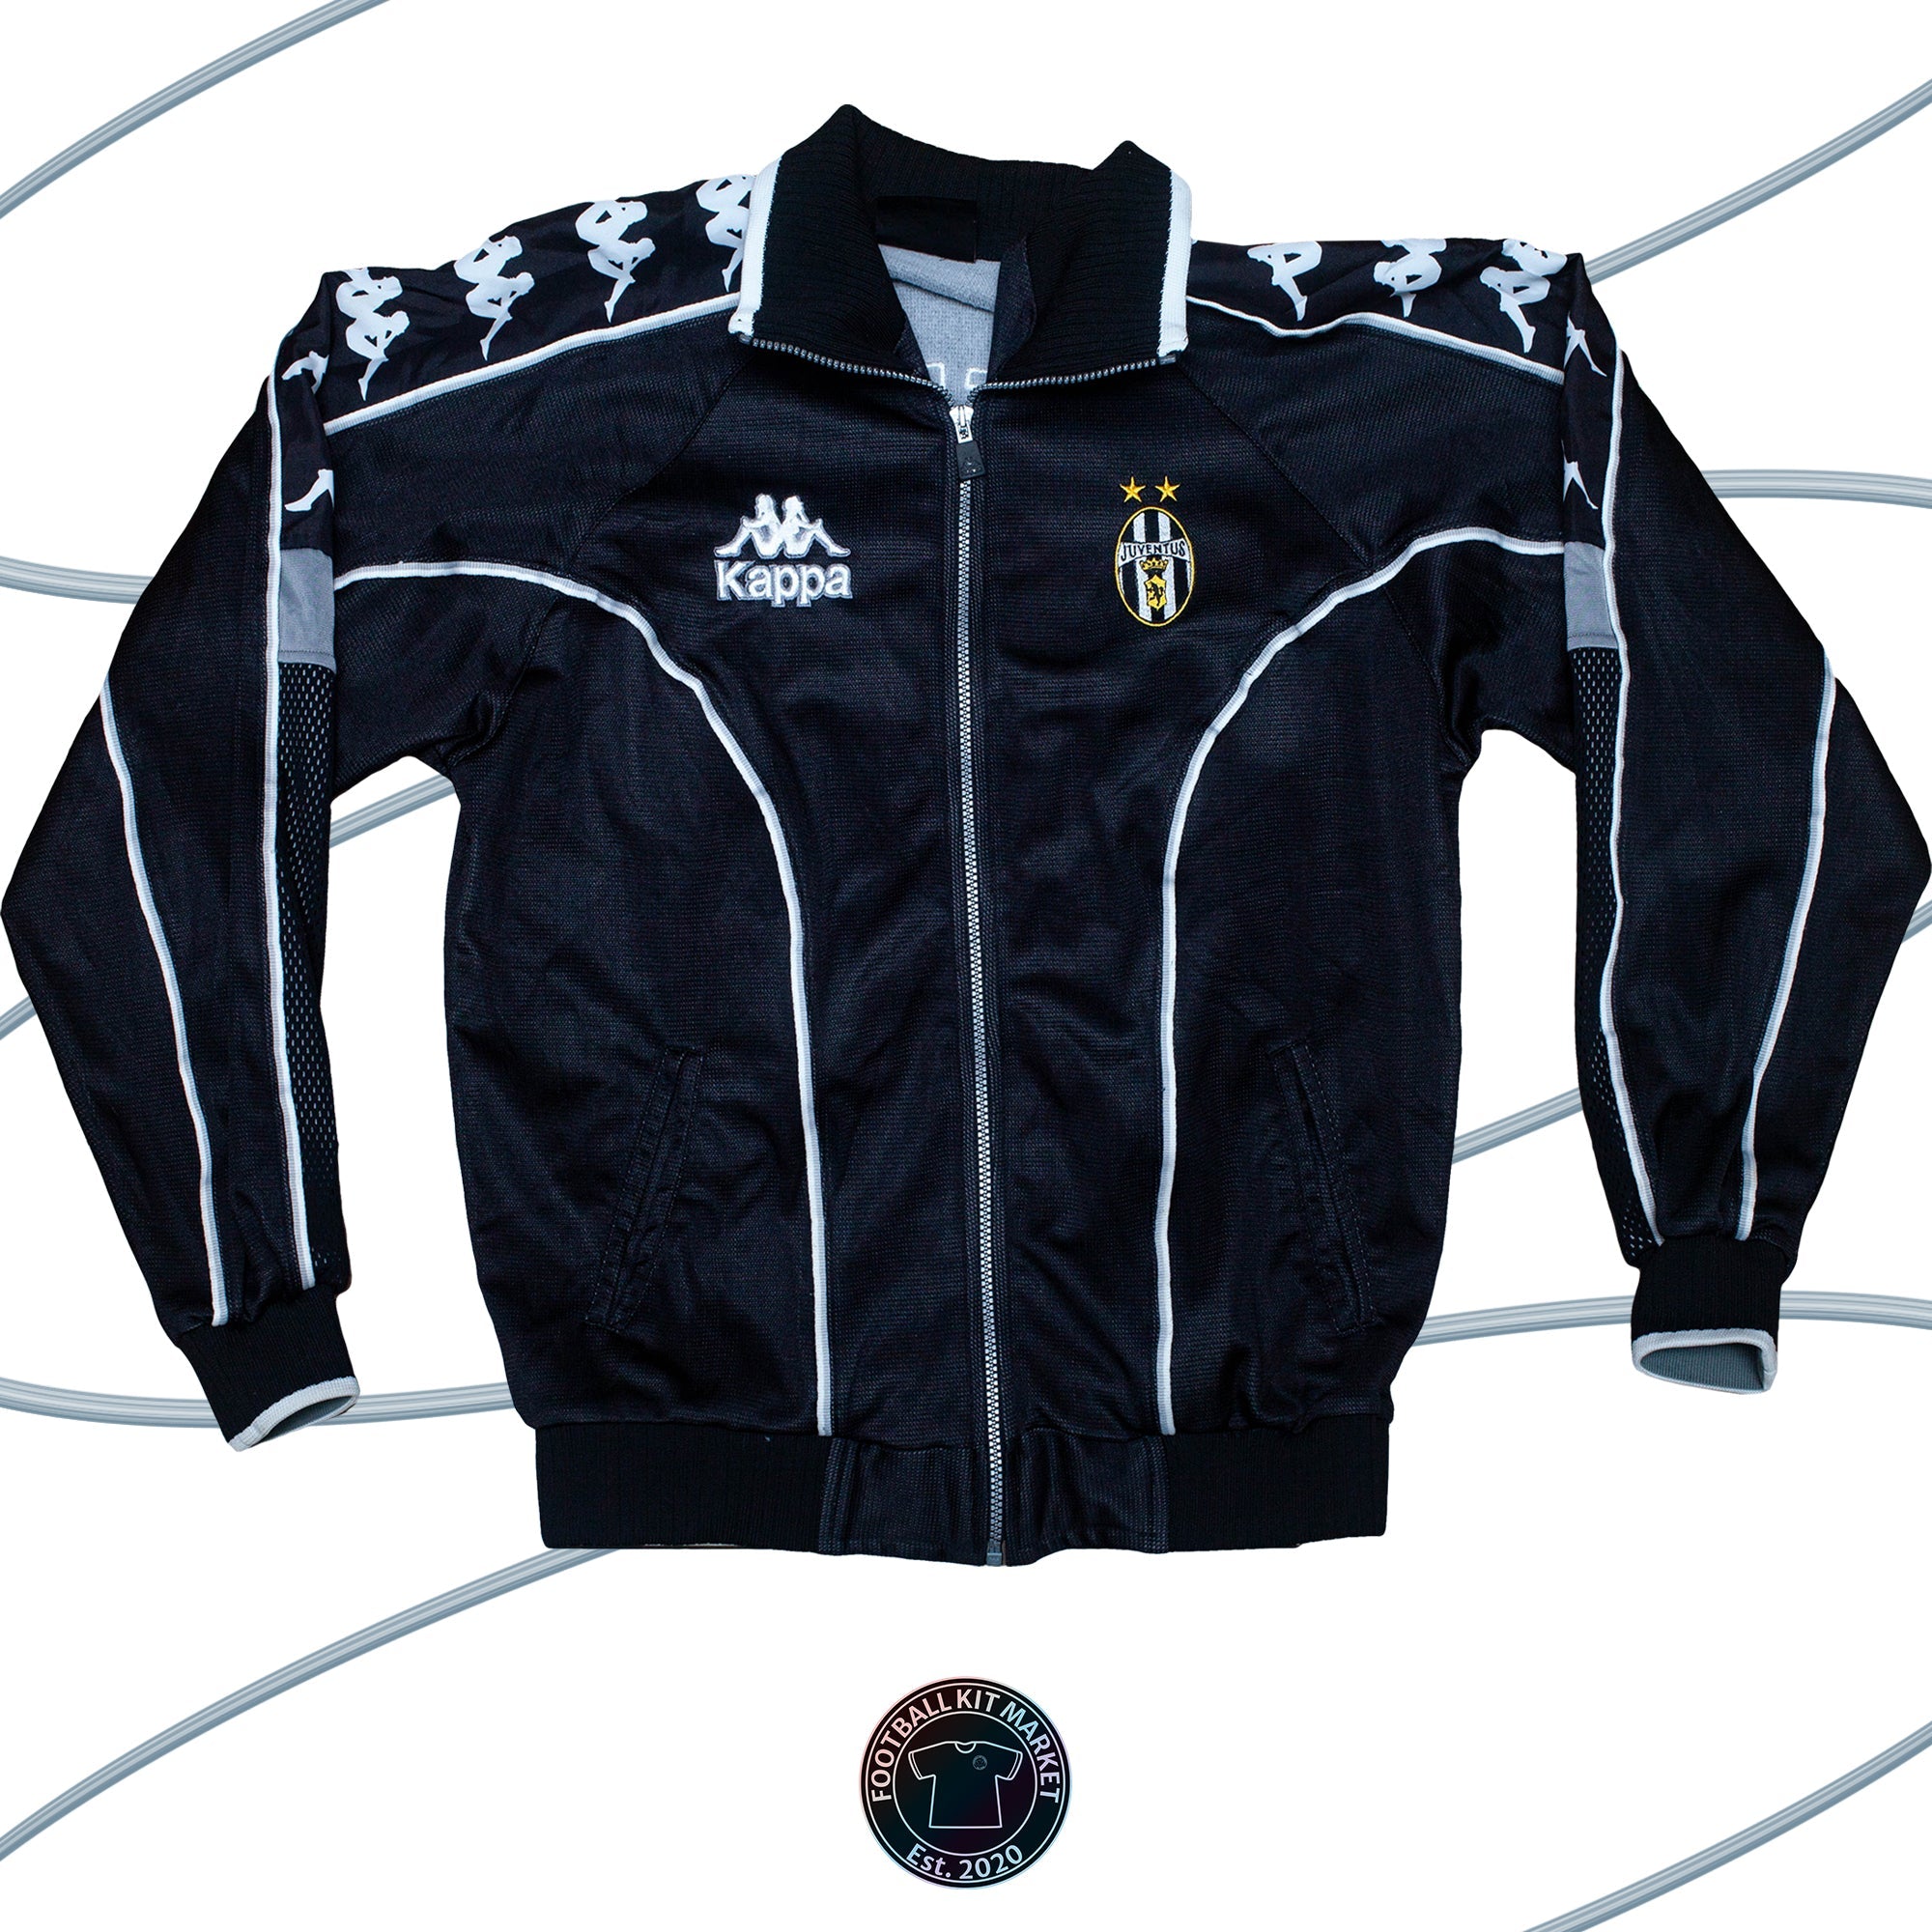 Genuine JUVENTUS Jacket (1998-1999) - KAPPA (L) - Product Image from Football Kit Market